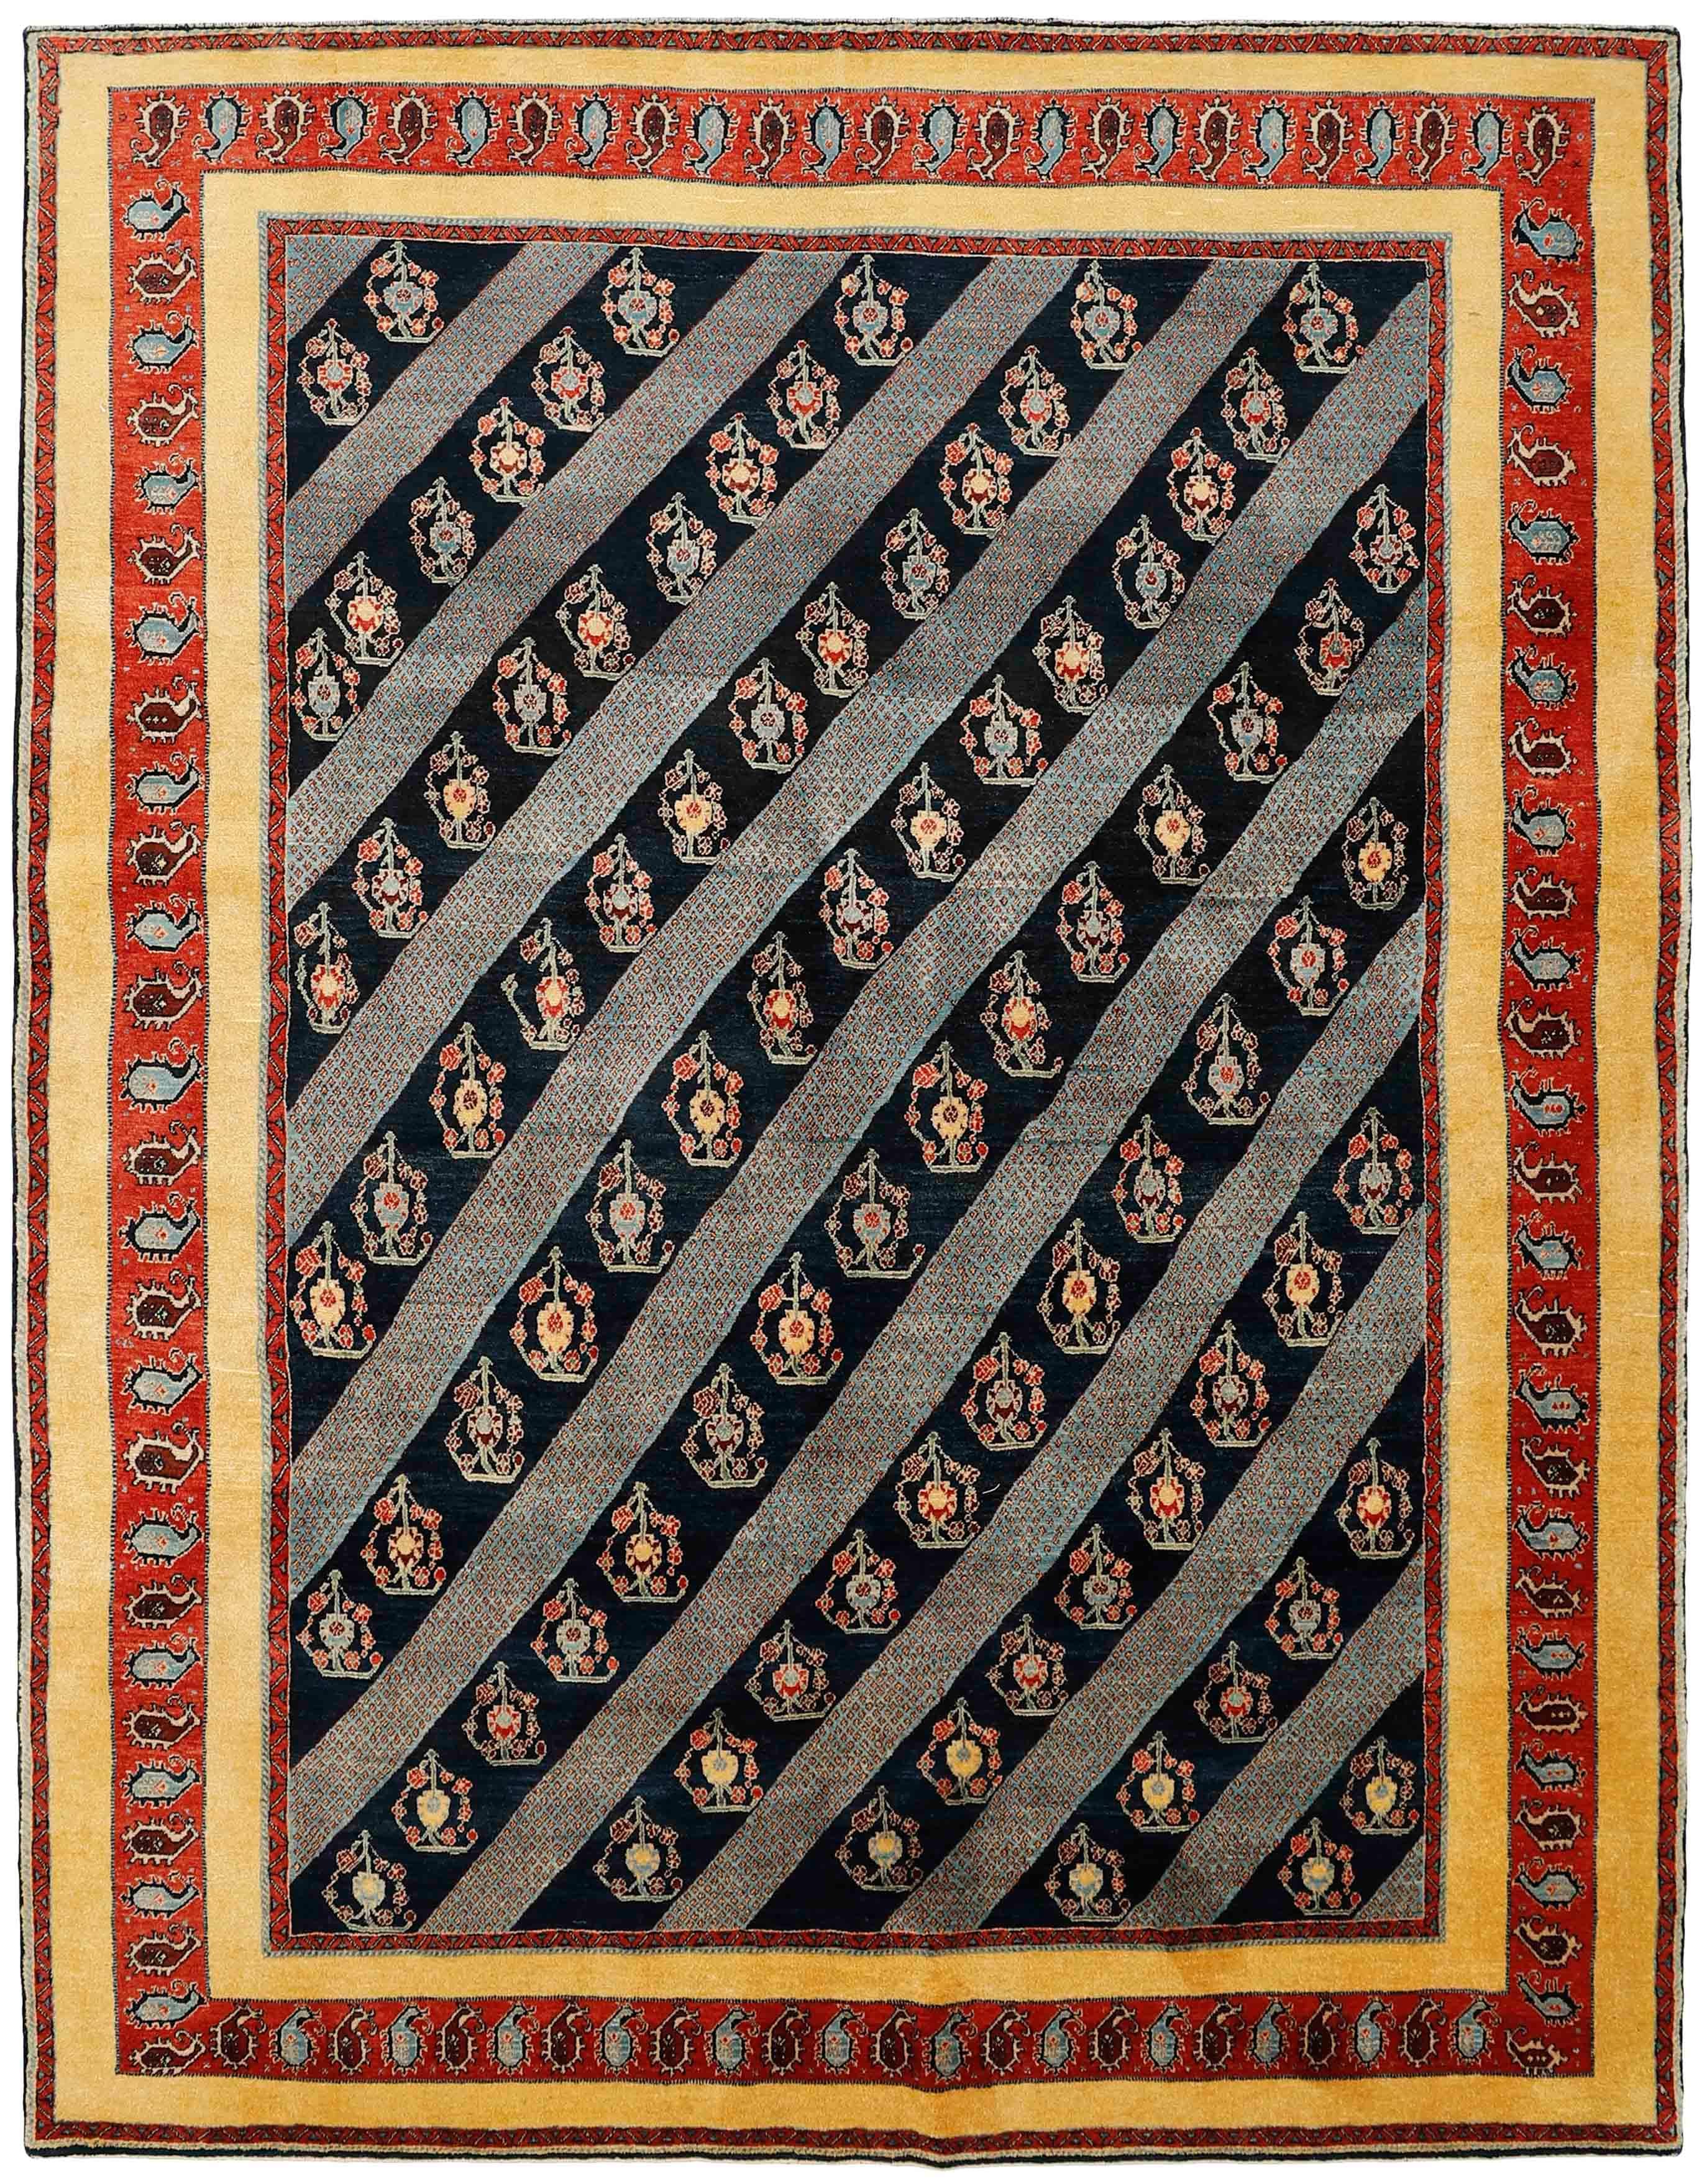 Multicoloured Persian rug with tribal geometric design